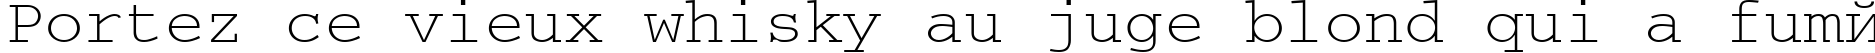 Пример написания шрифтом CourierCyrillic текста на французском